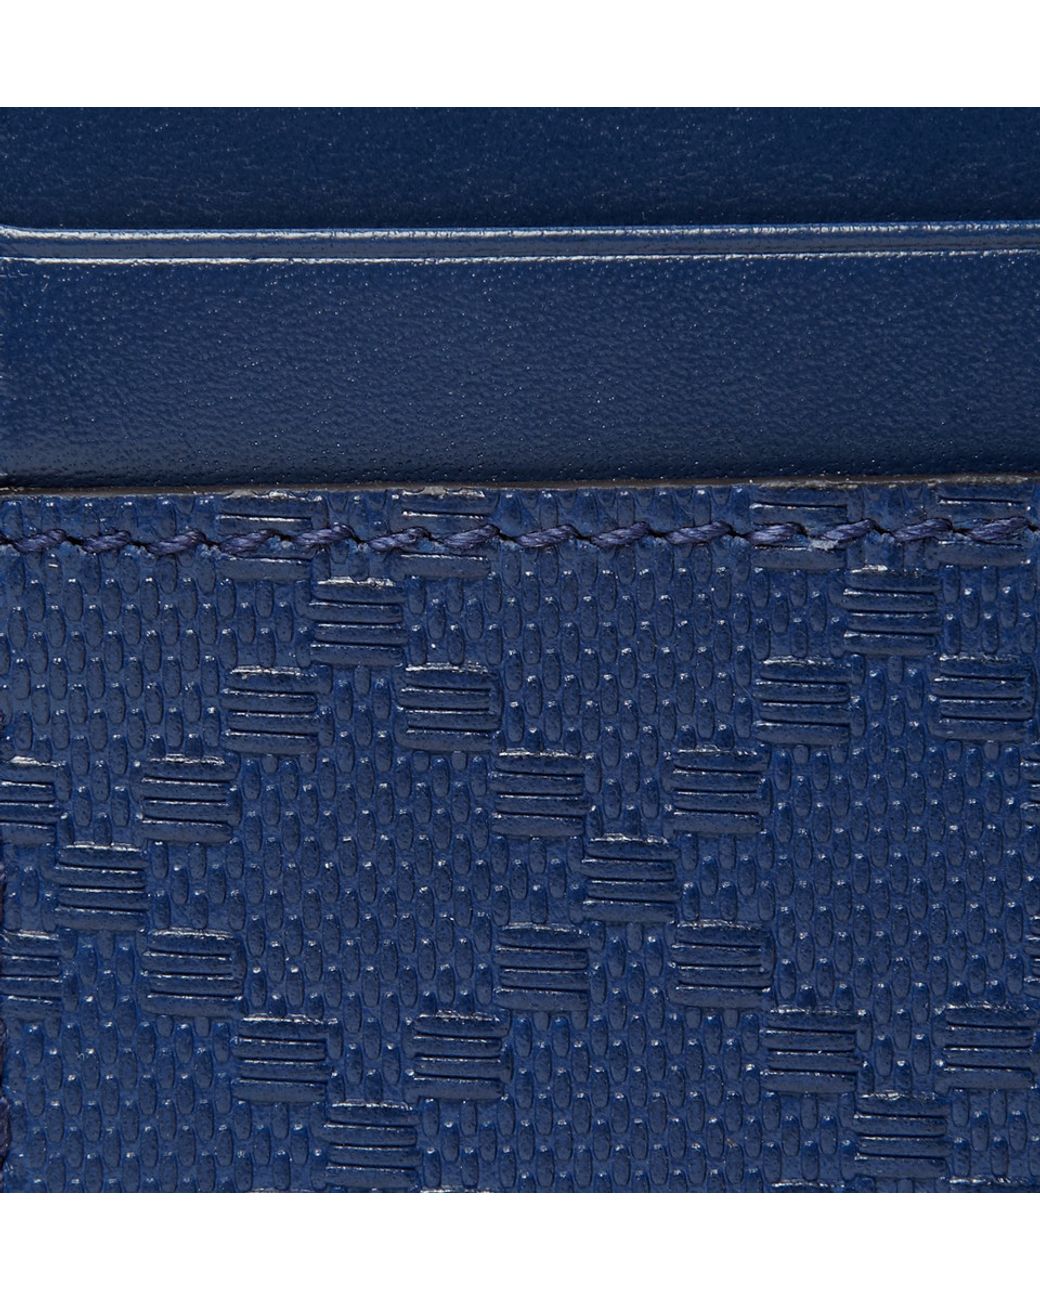 Gucci Embossed Leather Cardholder in Blue for Men